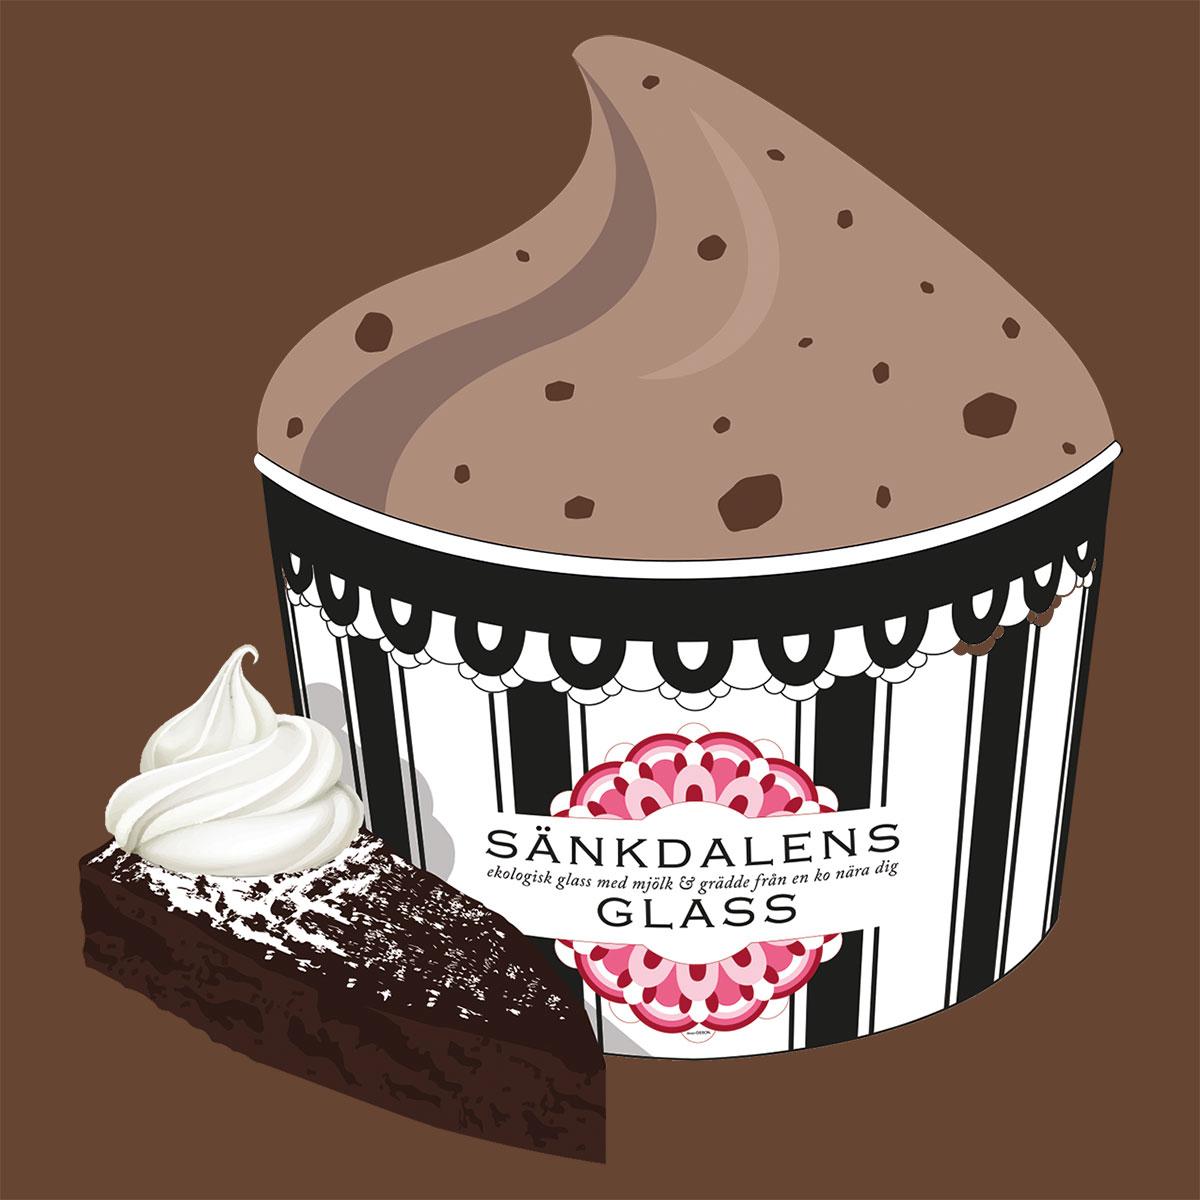 Cream ice cream with the taste of cake